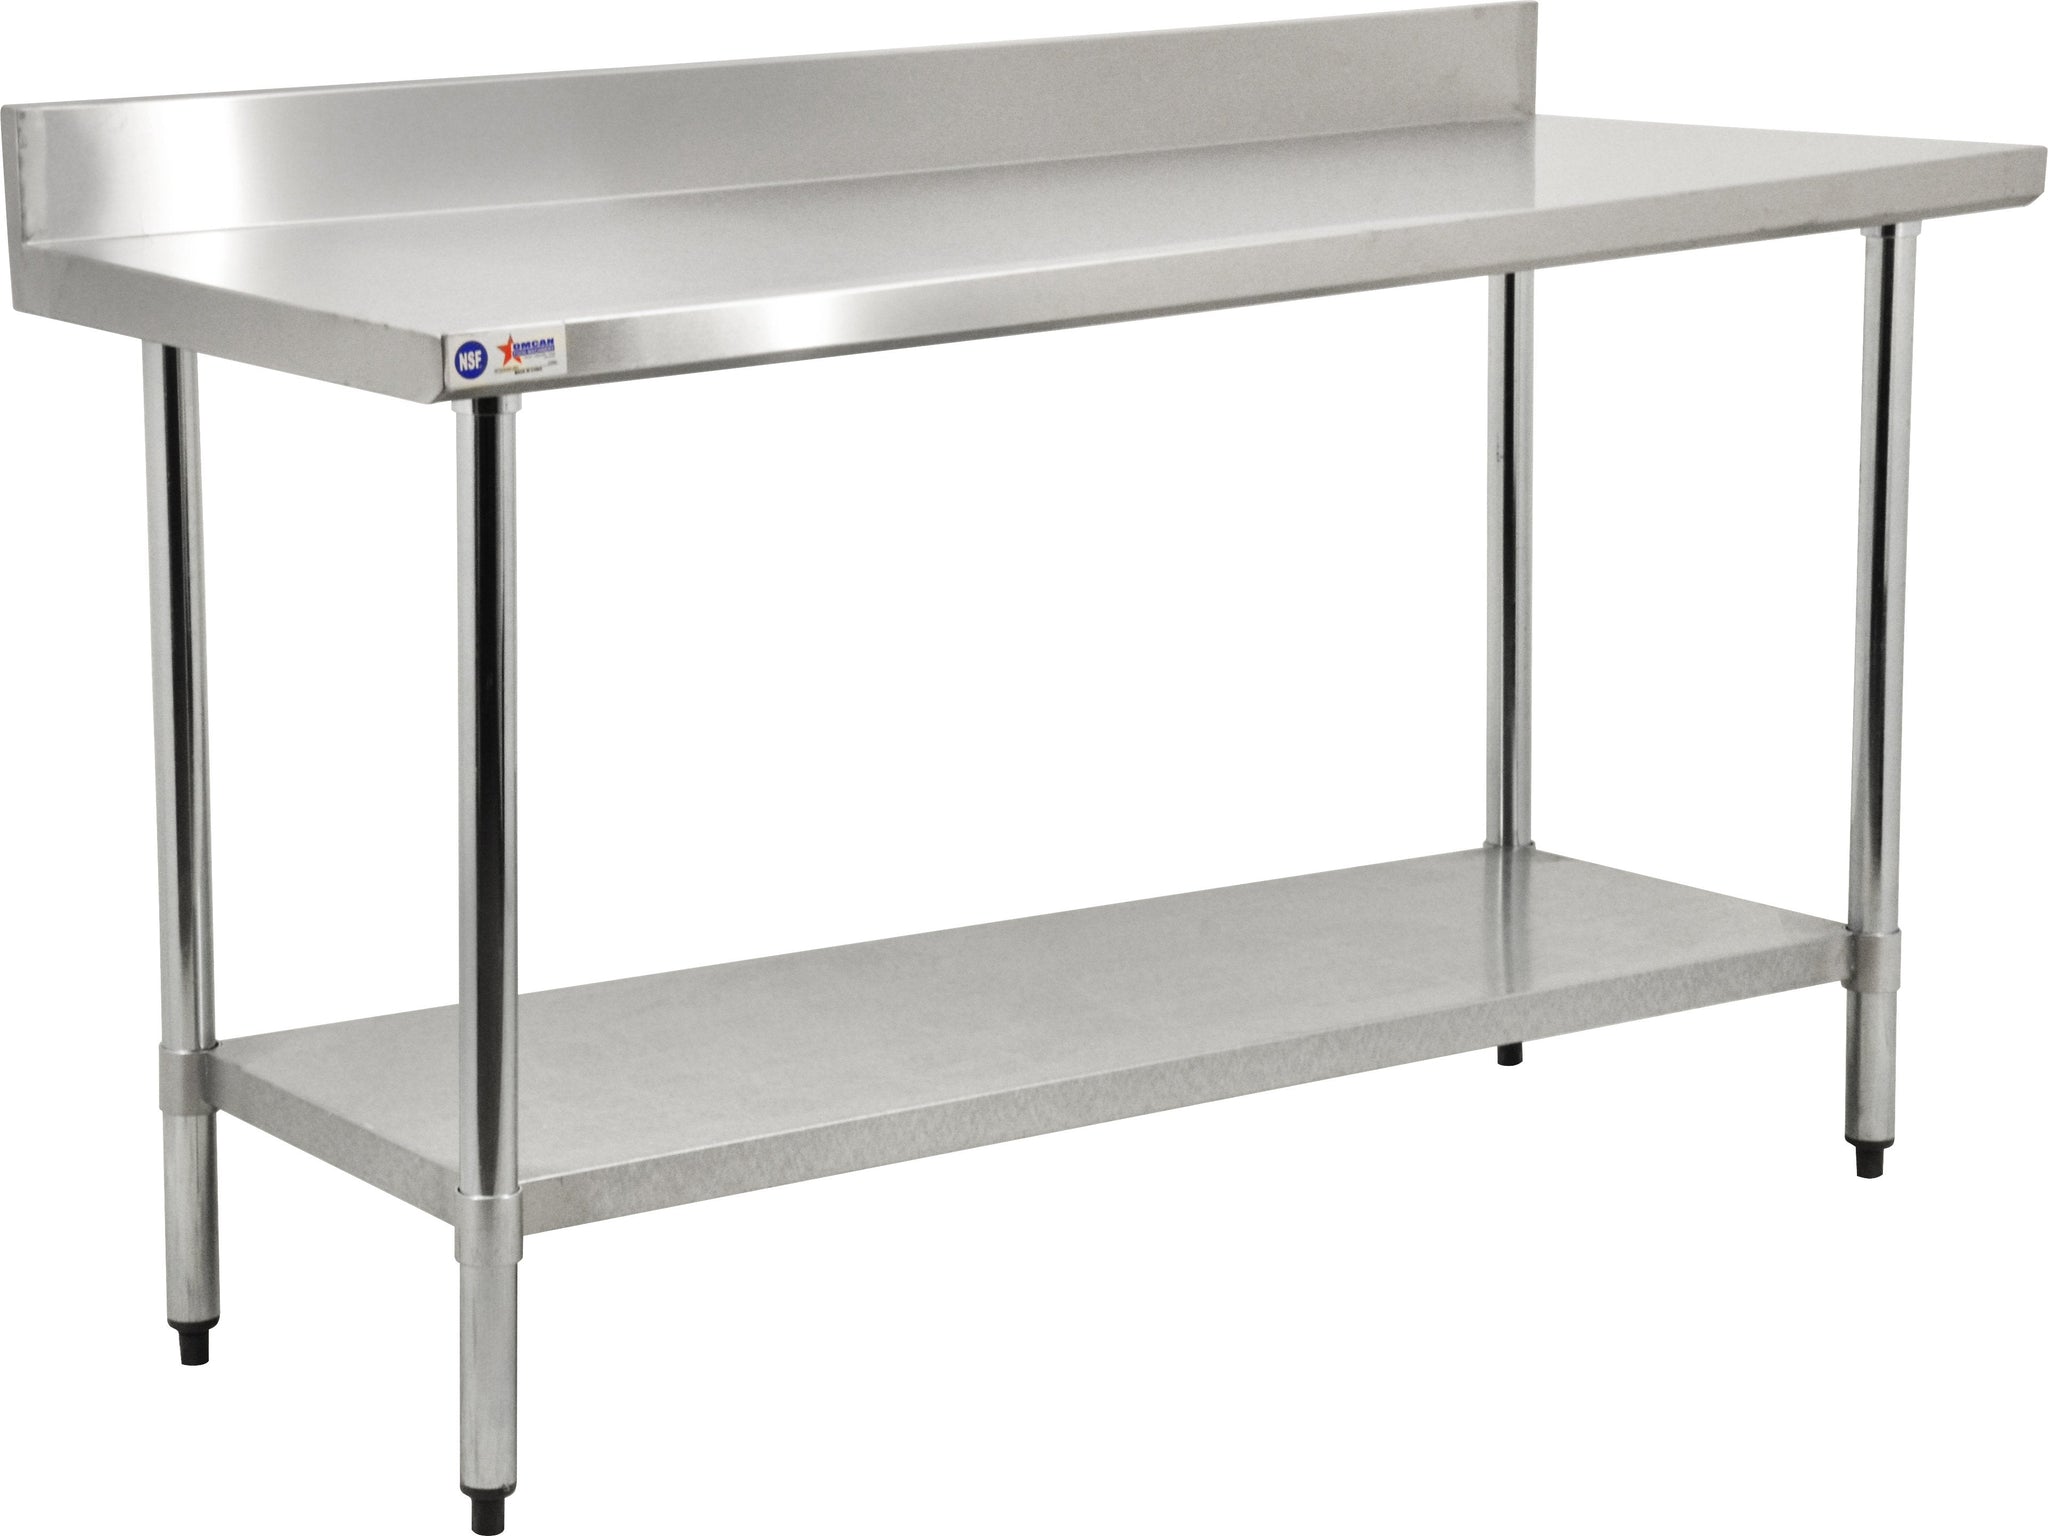 Omcan - 24” x 30” Standard Work Table with Backsplash - 22079